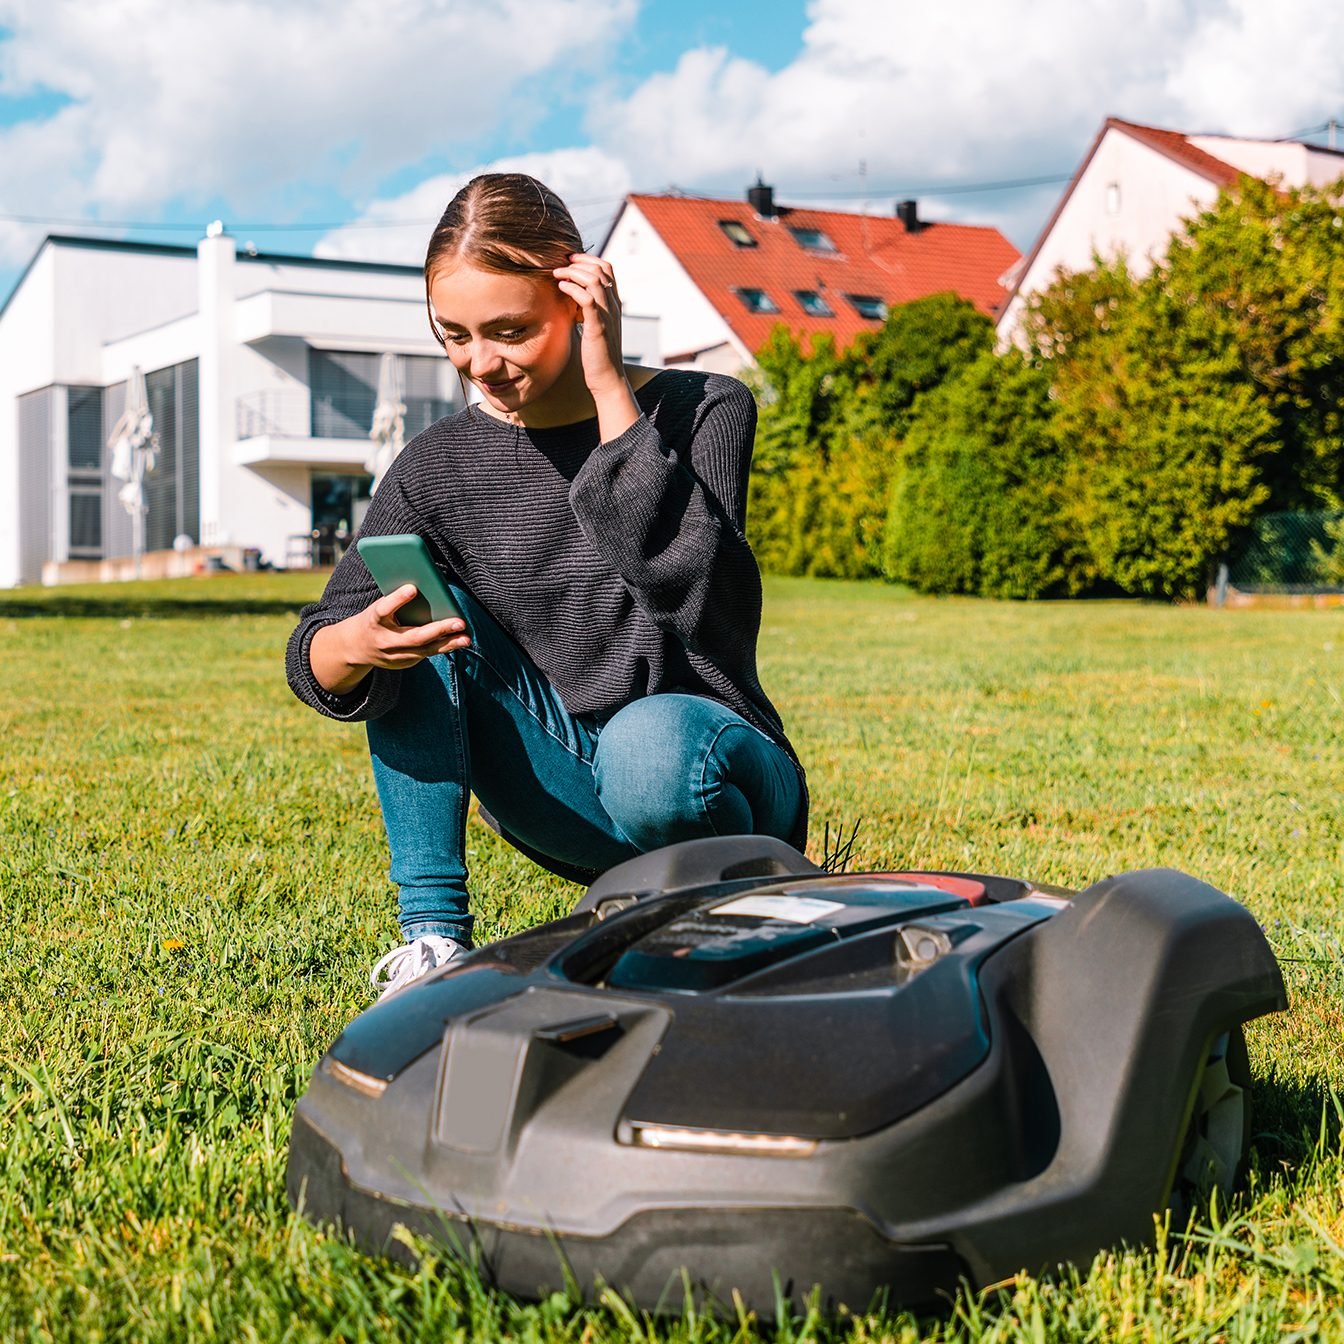 Robot Lawn Mower Buying Guide